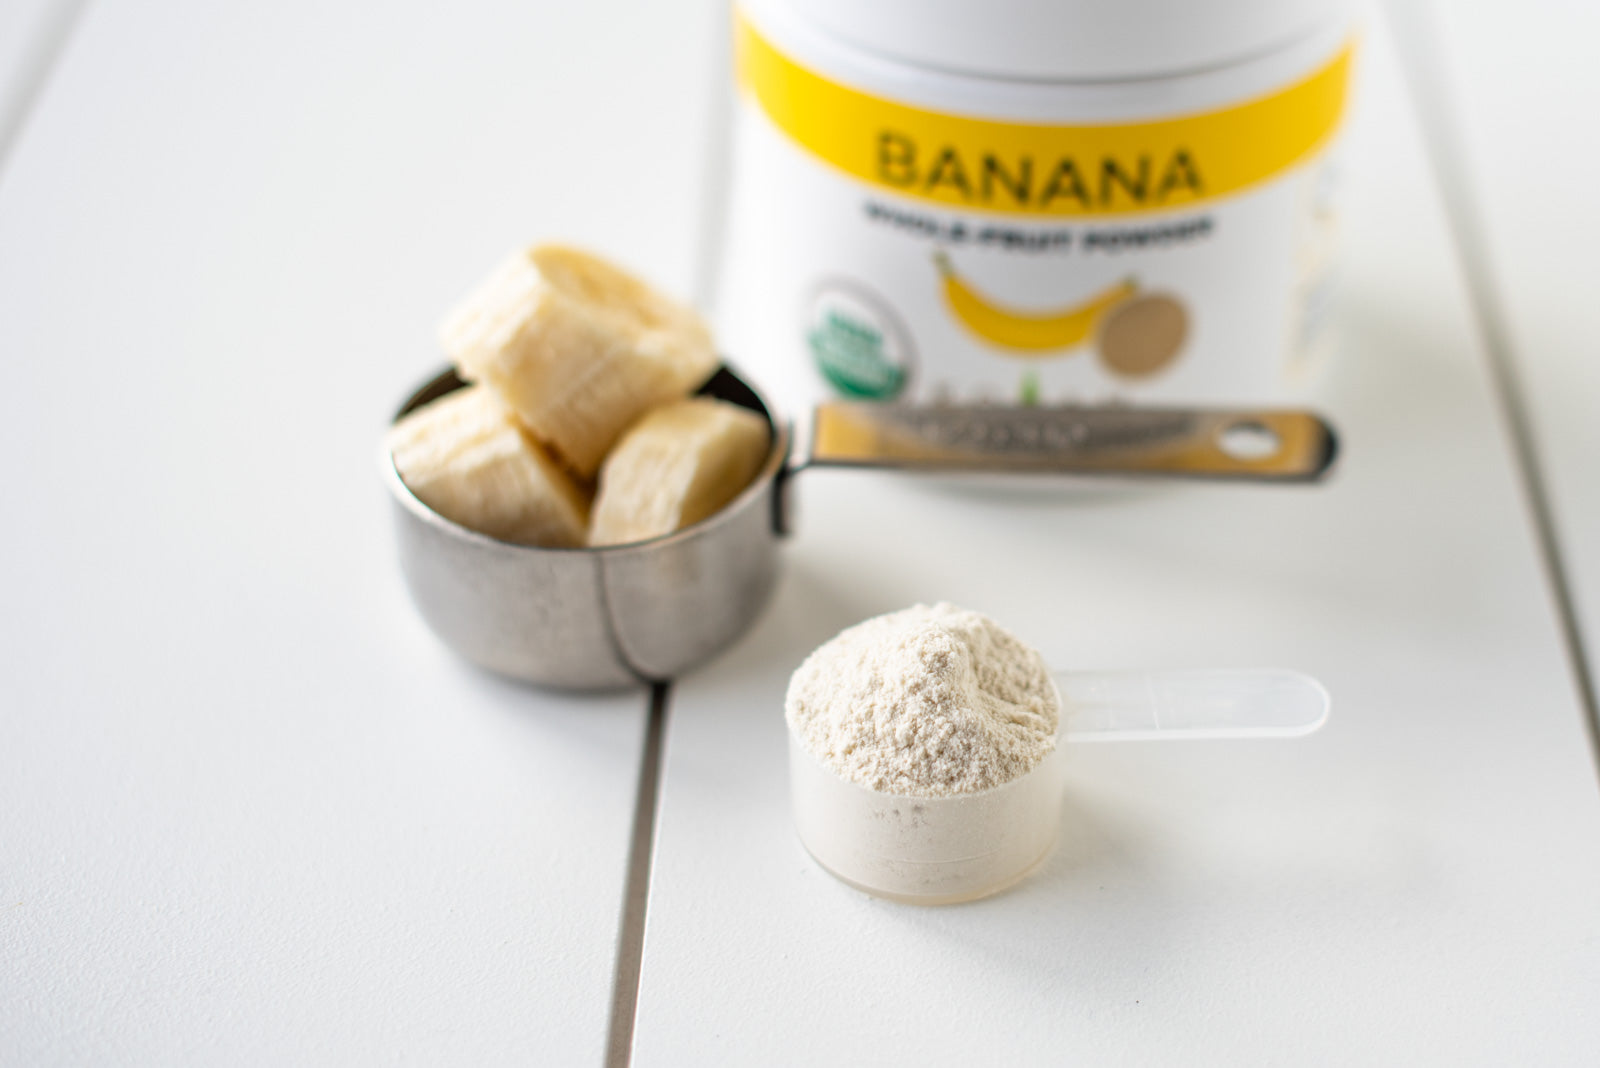 Organic Banana Powder - Fruit Supplement for Smoothies, Desserts